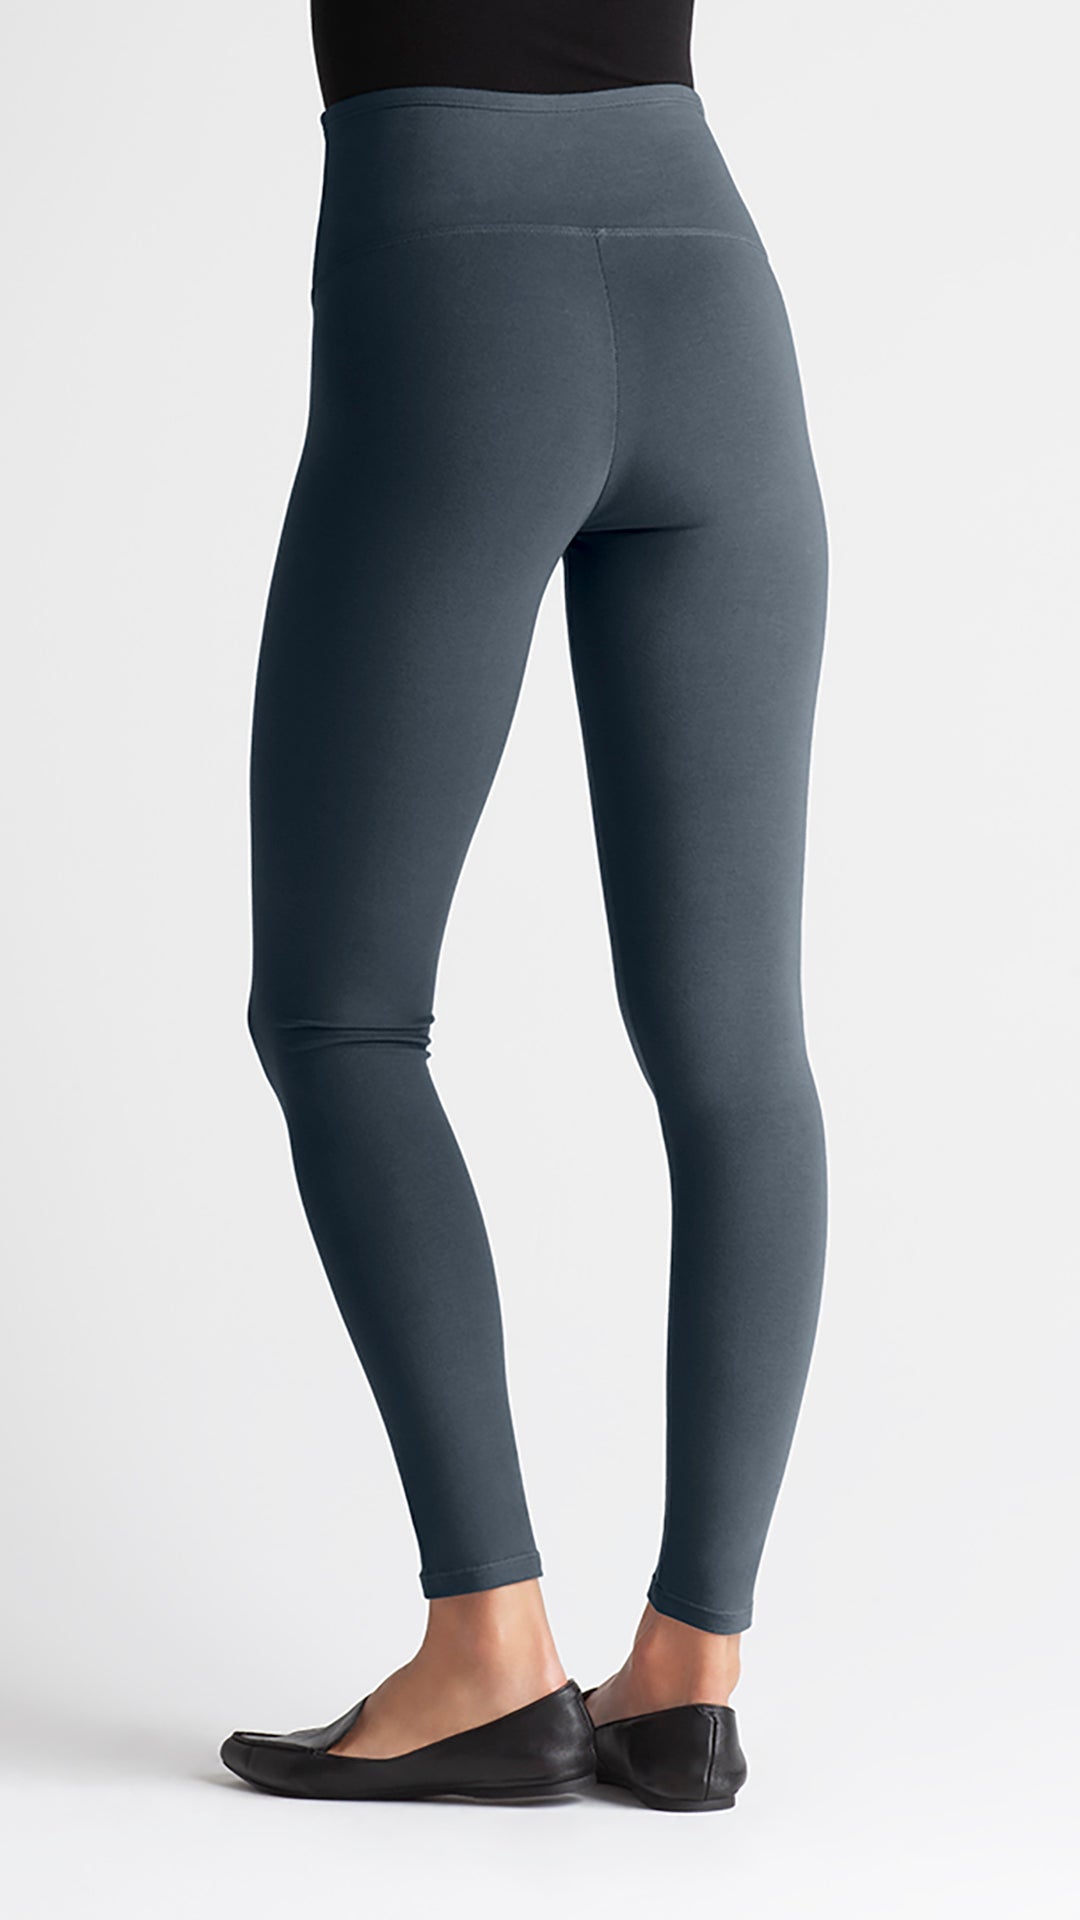 Gudrun Sjoden sz XL leggings stretch eco organic cotton black